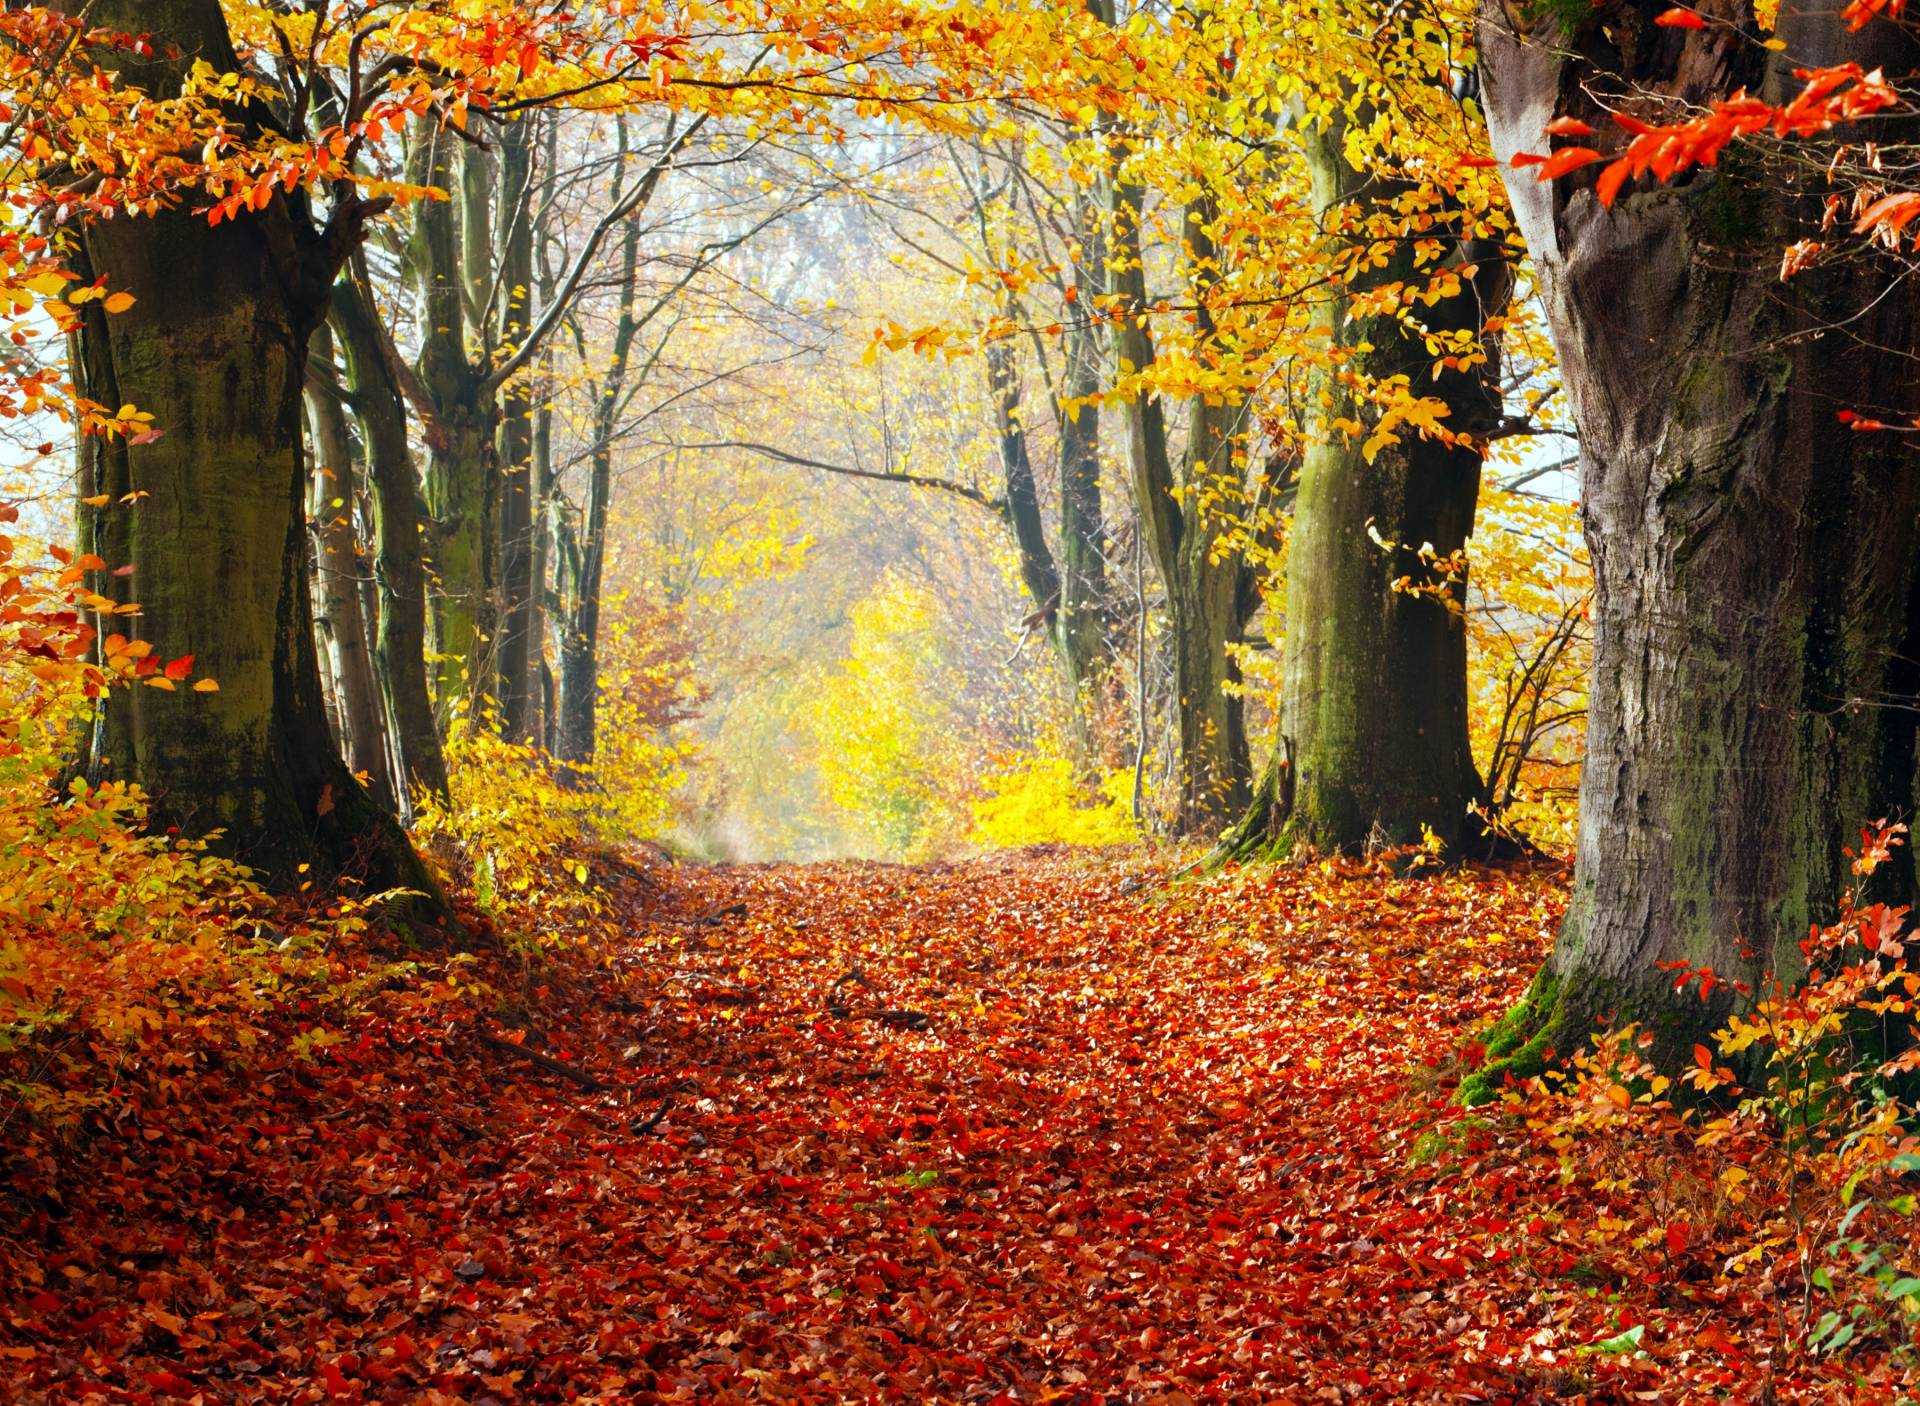 Papermoon Fototapete "Autumn Forest Path" von Papermoon